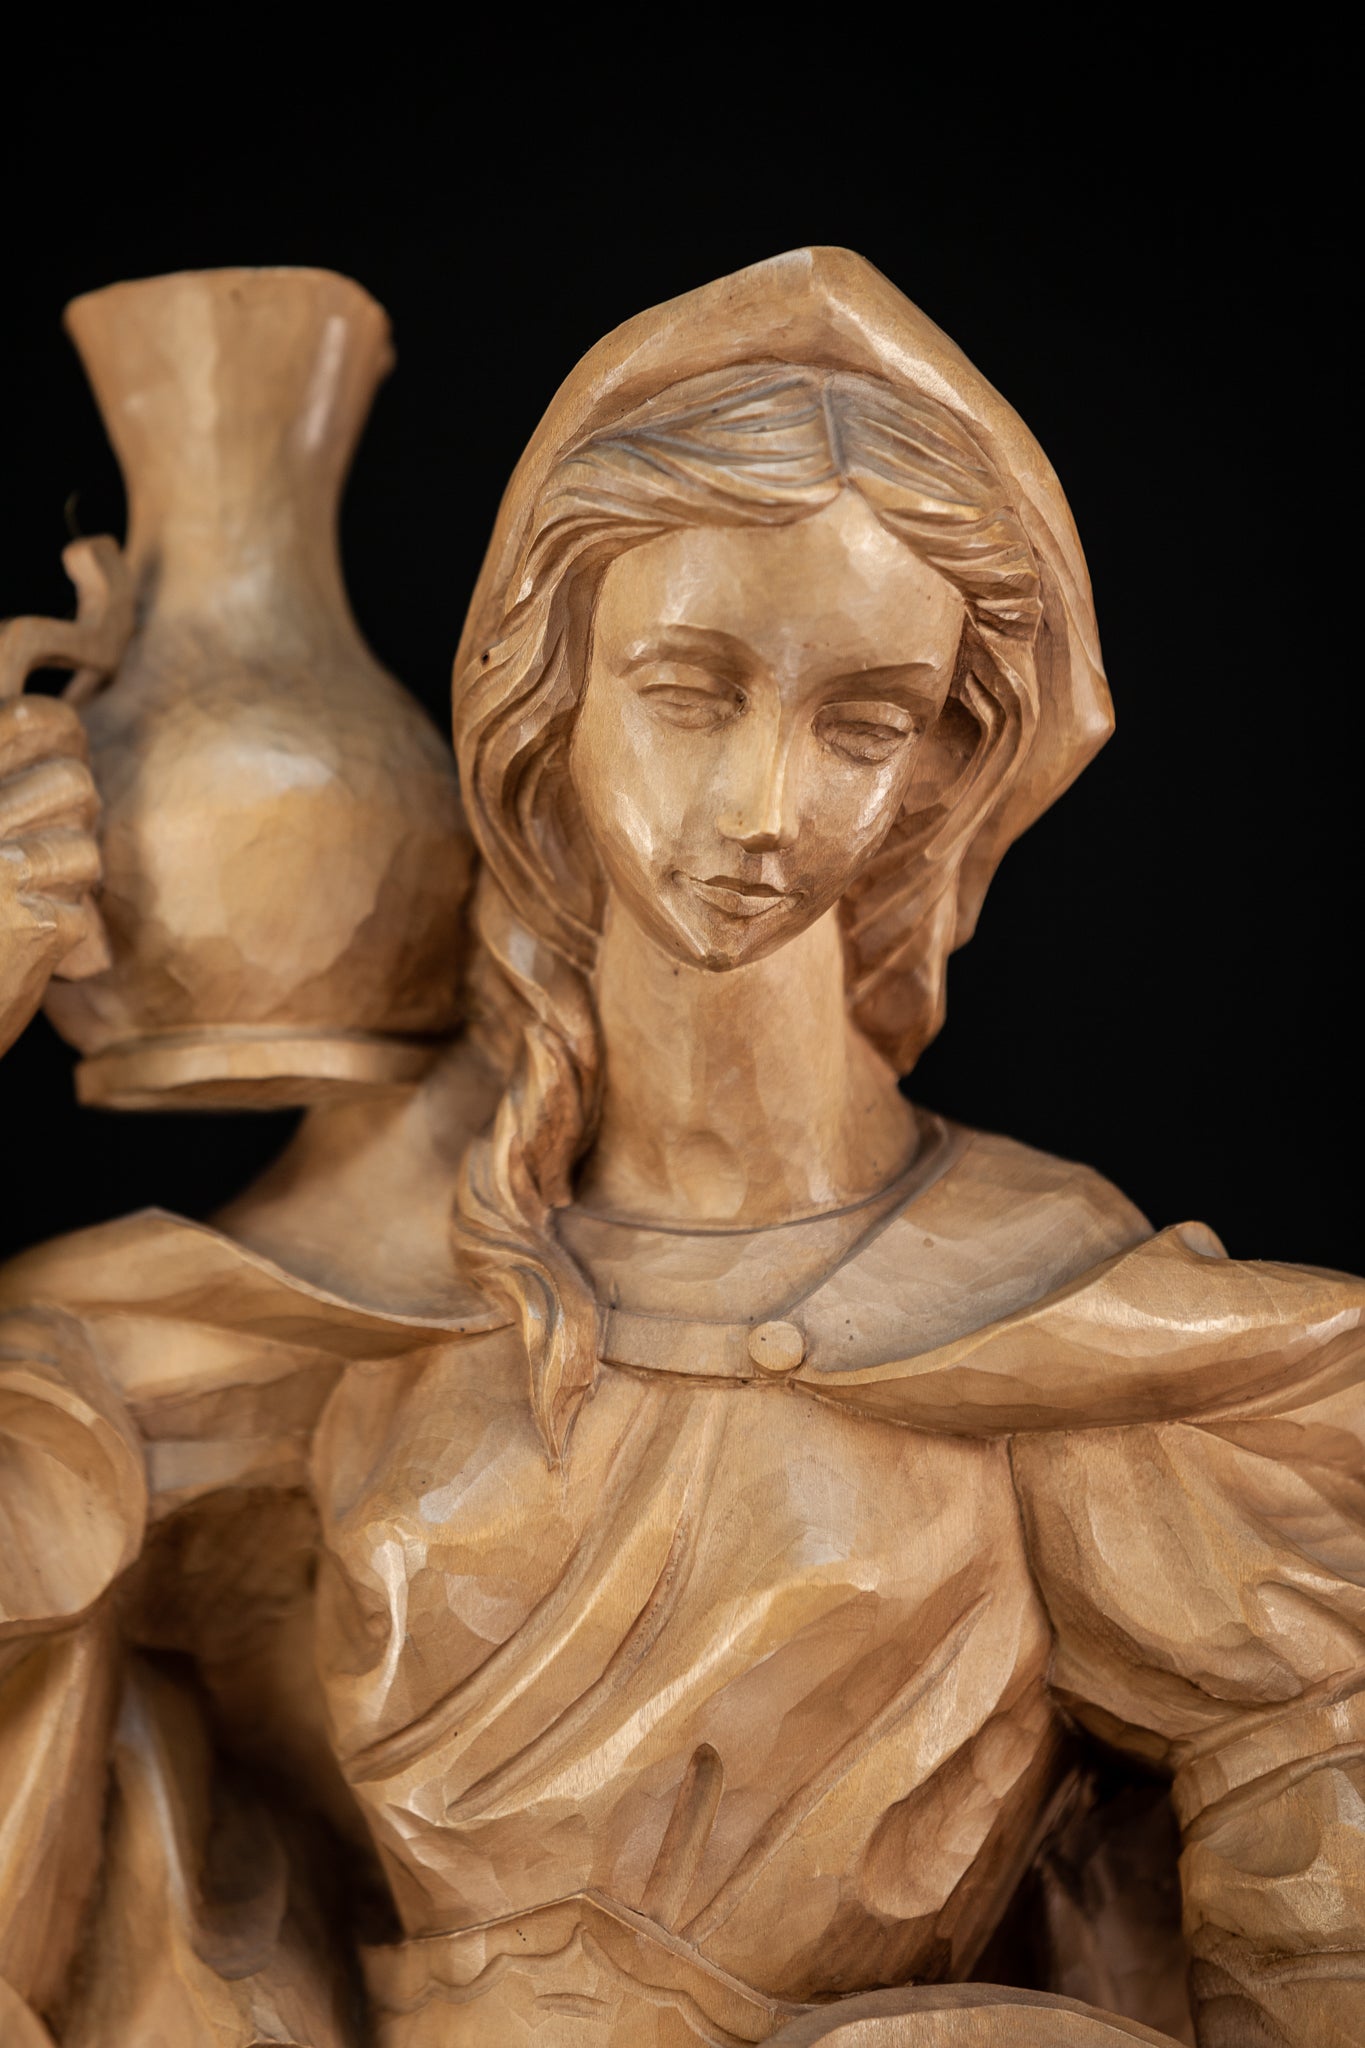 St Elizabeth of Hungary Wood Sculpture 24.4”